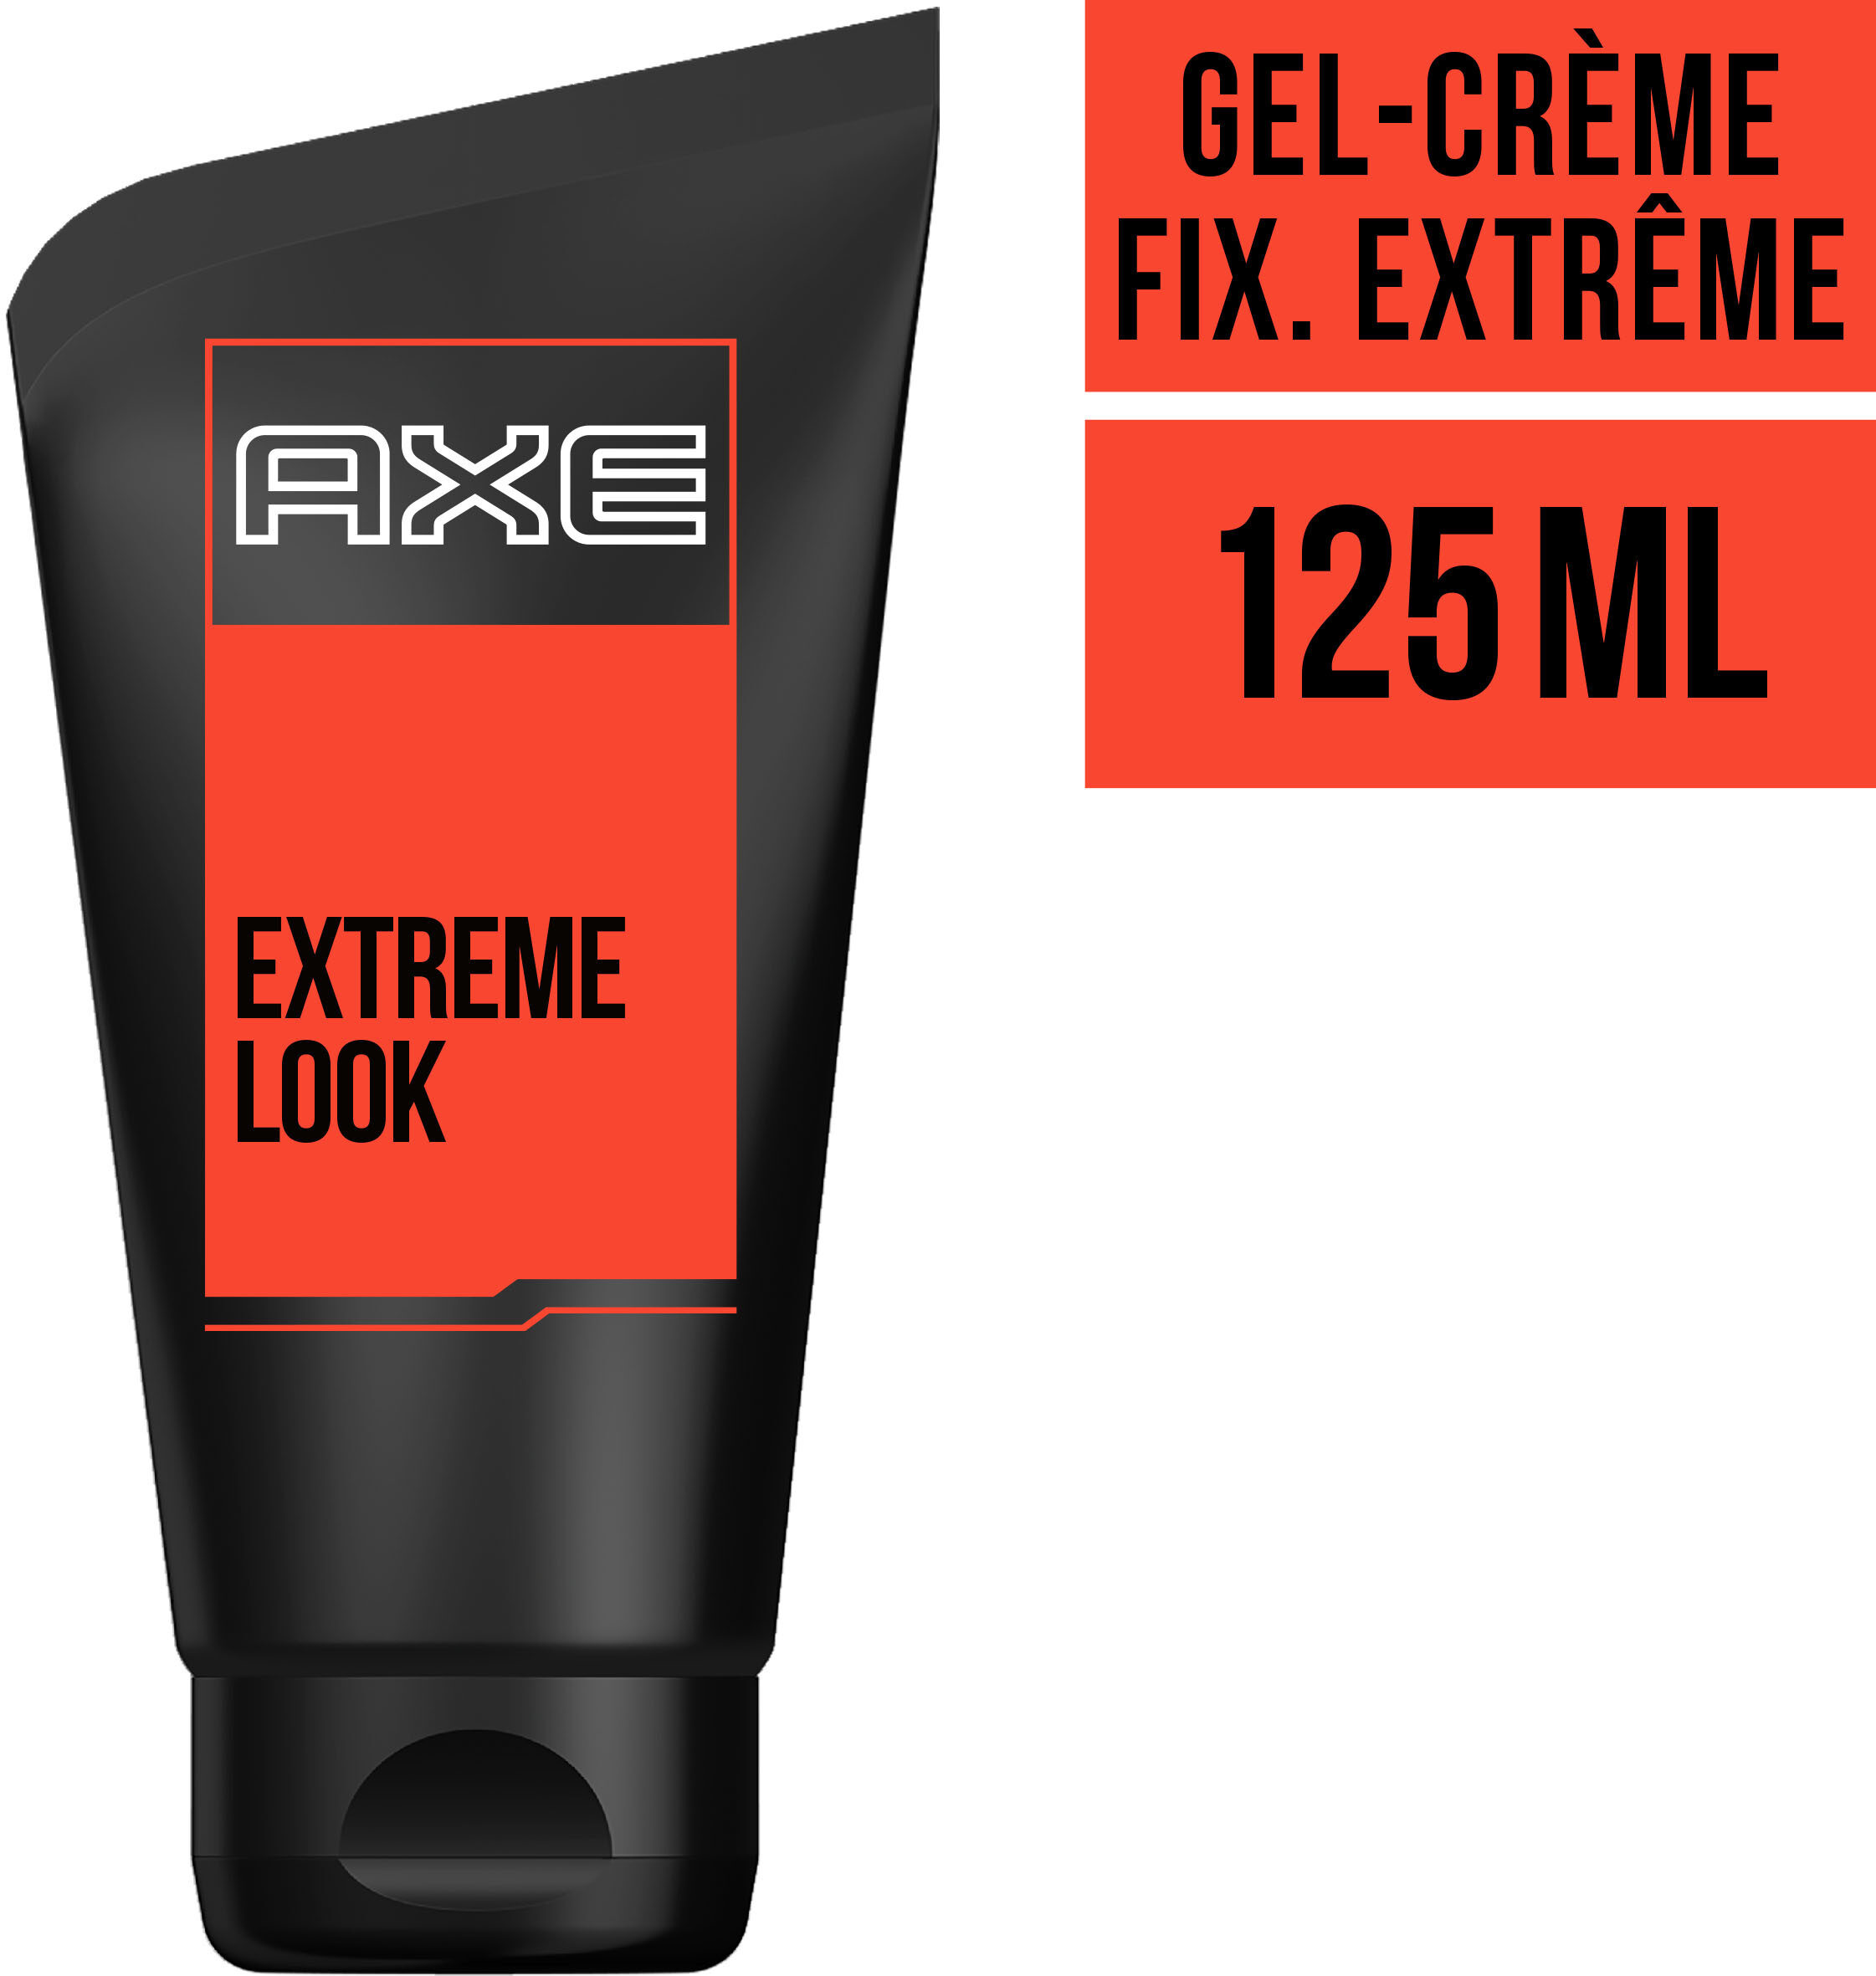 Axe Gel Cheveux Adrénaline Fixation Extrême 125ml - Product - fr